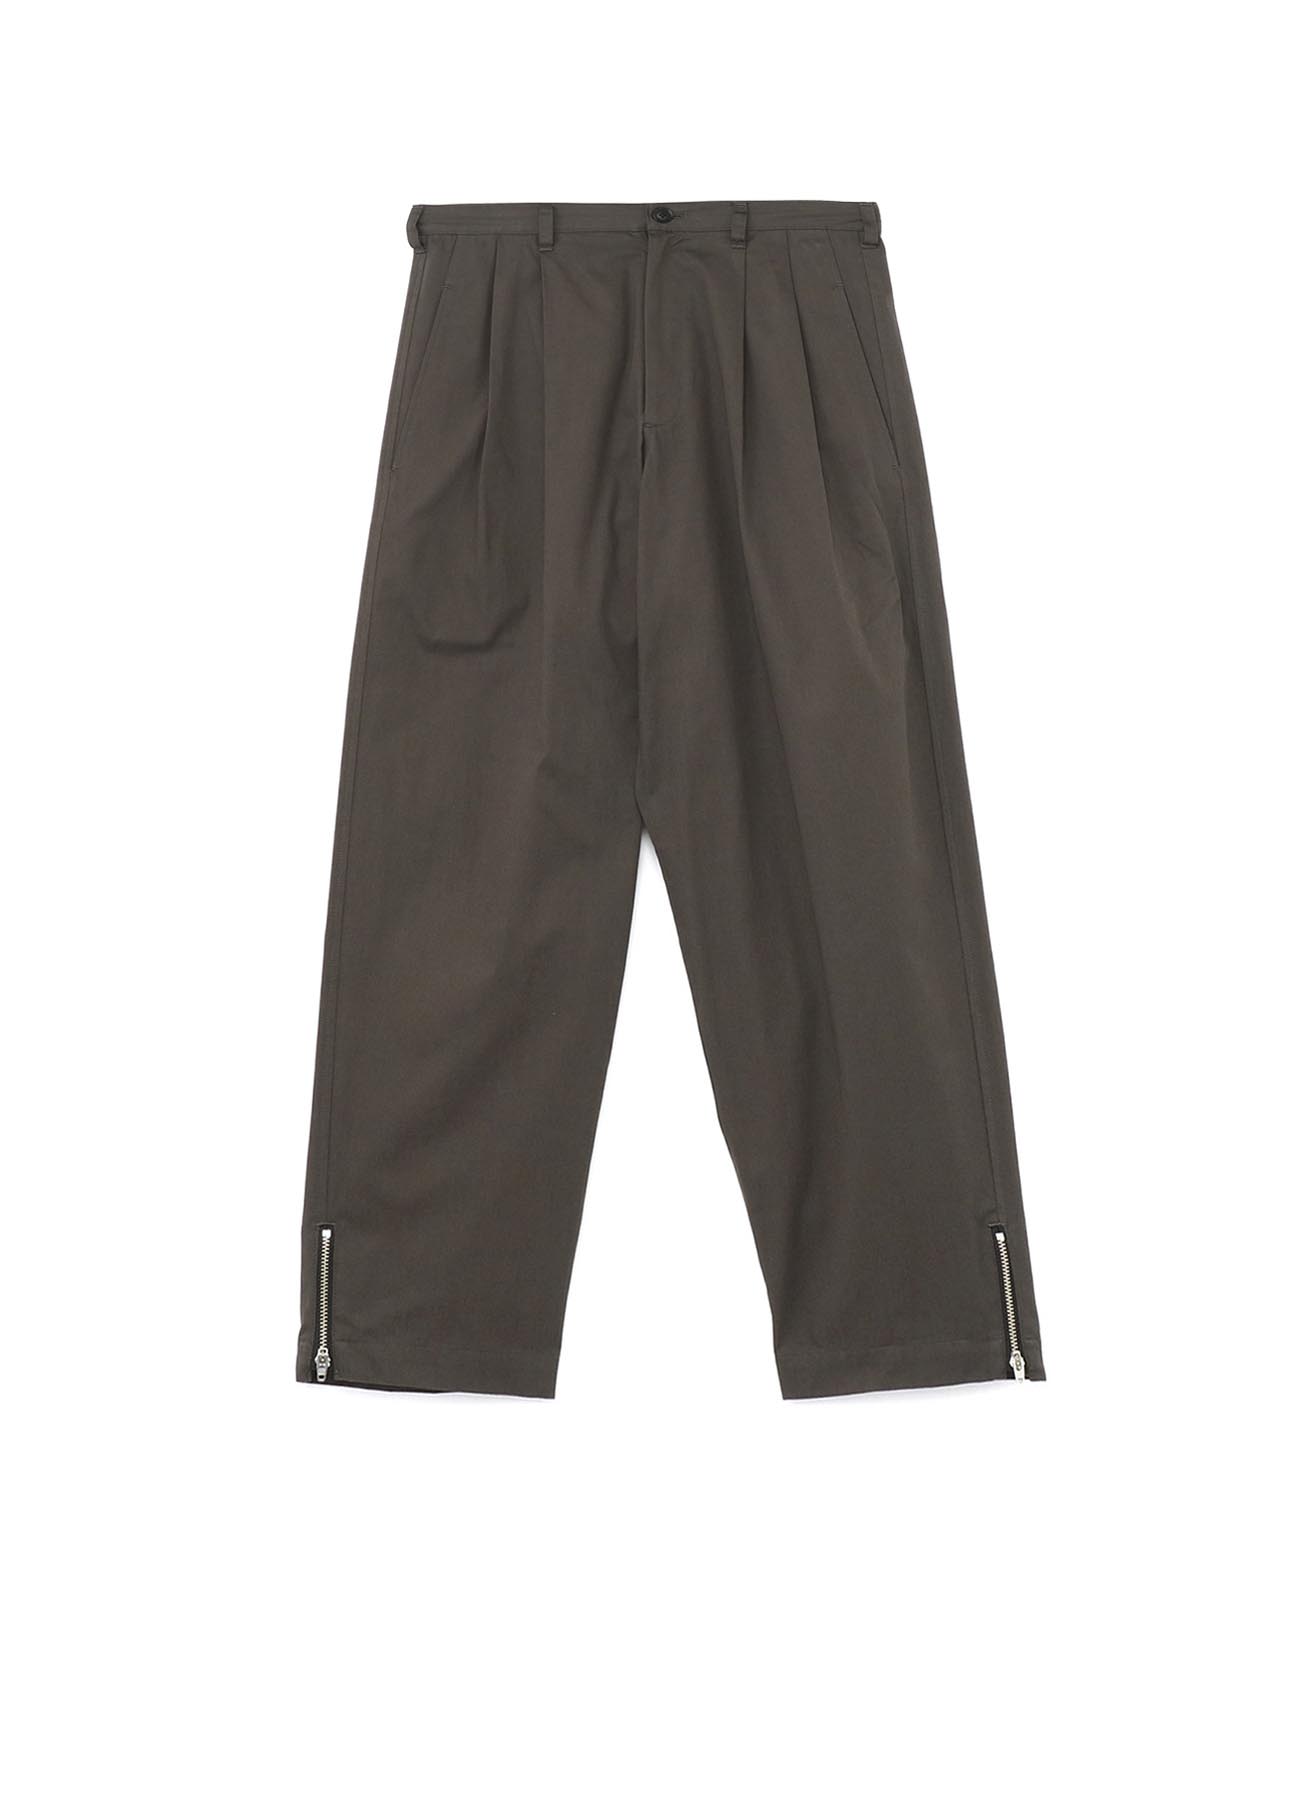 30/cotton twill Hem zipper pants